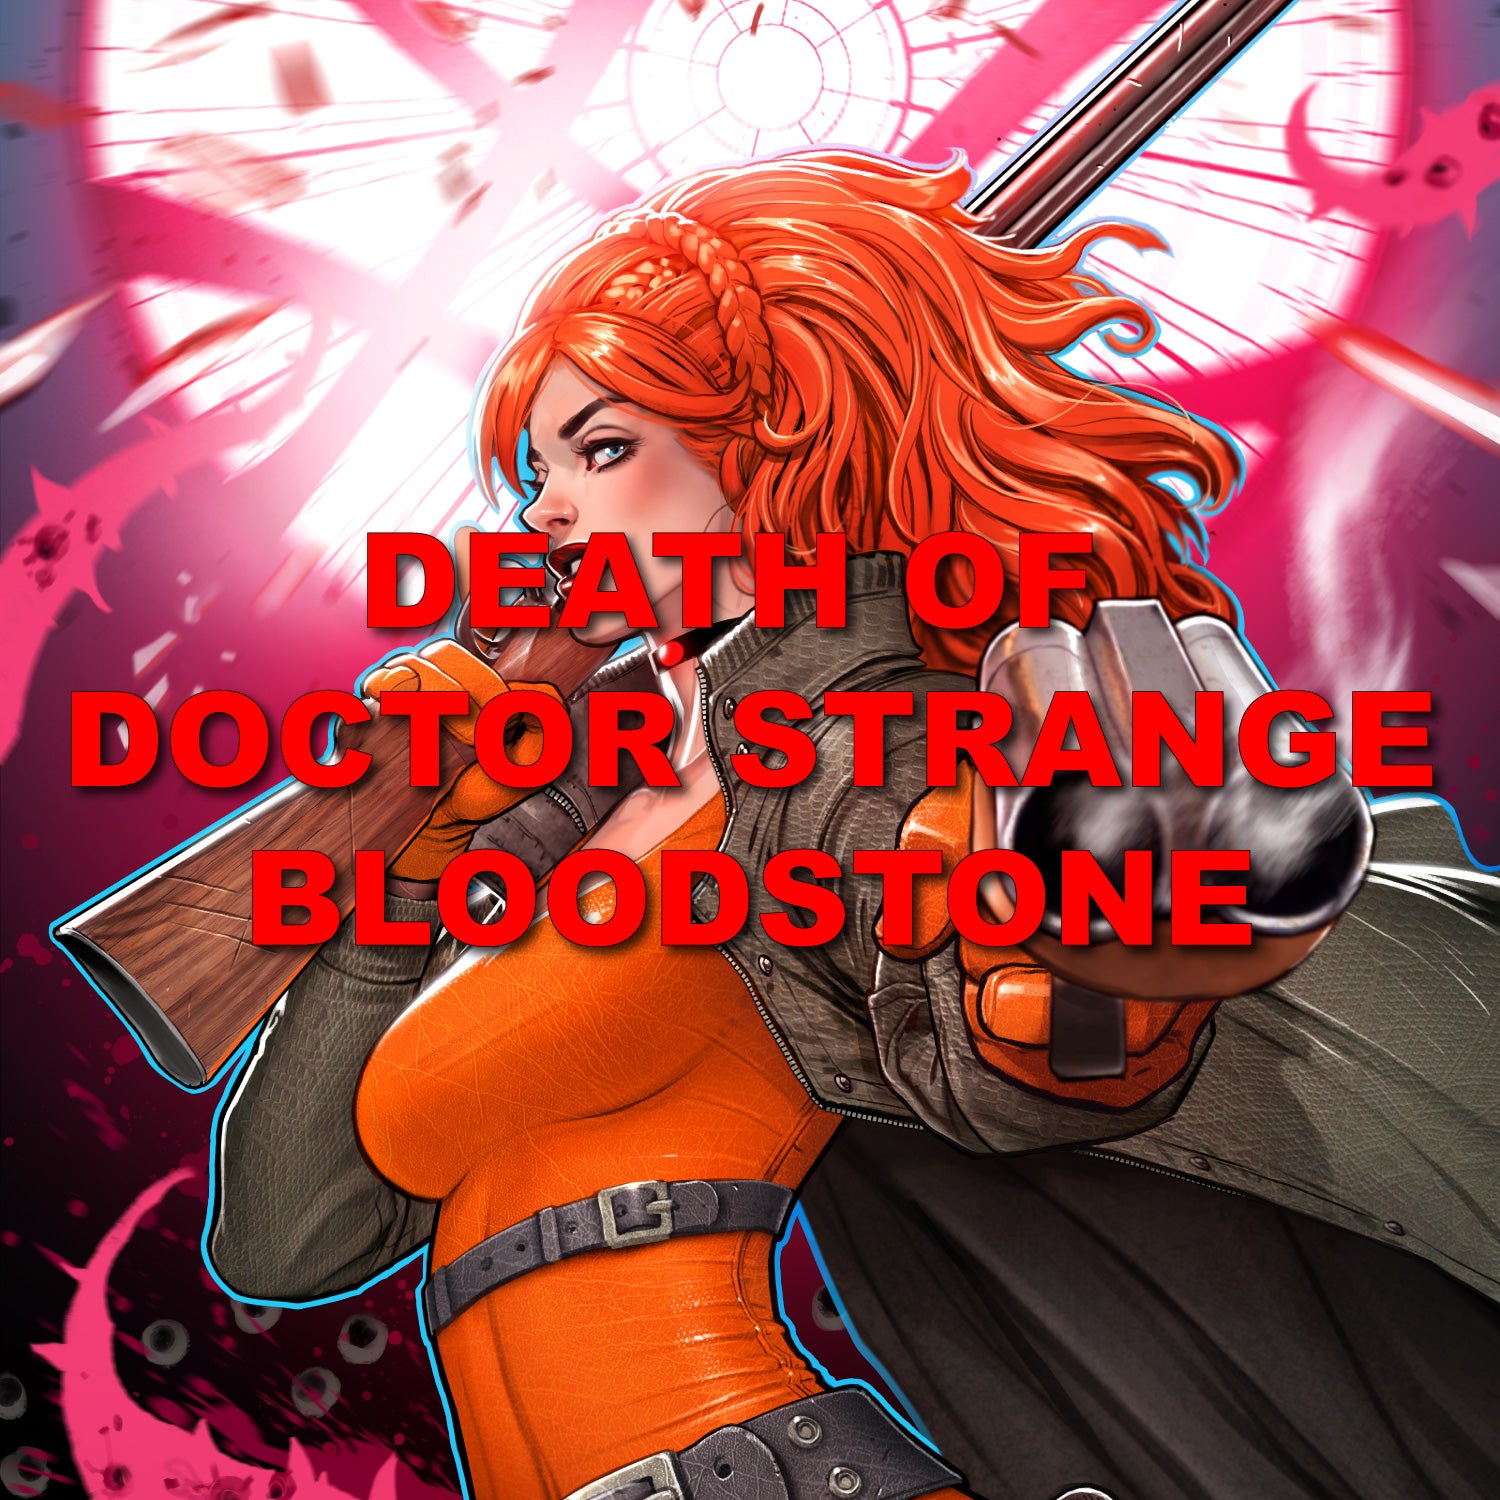 DEATH OF DOCTOR STRANGE BLOODSTONE